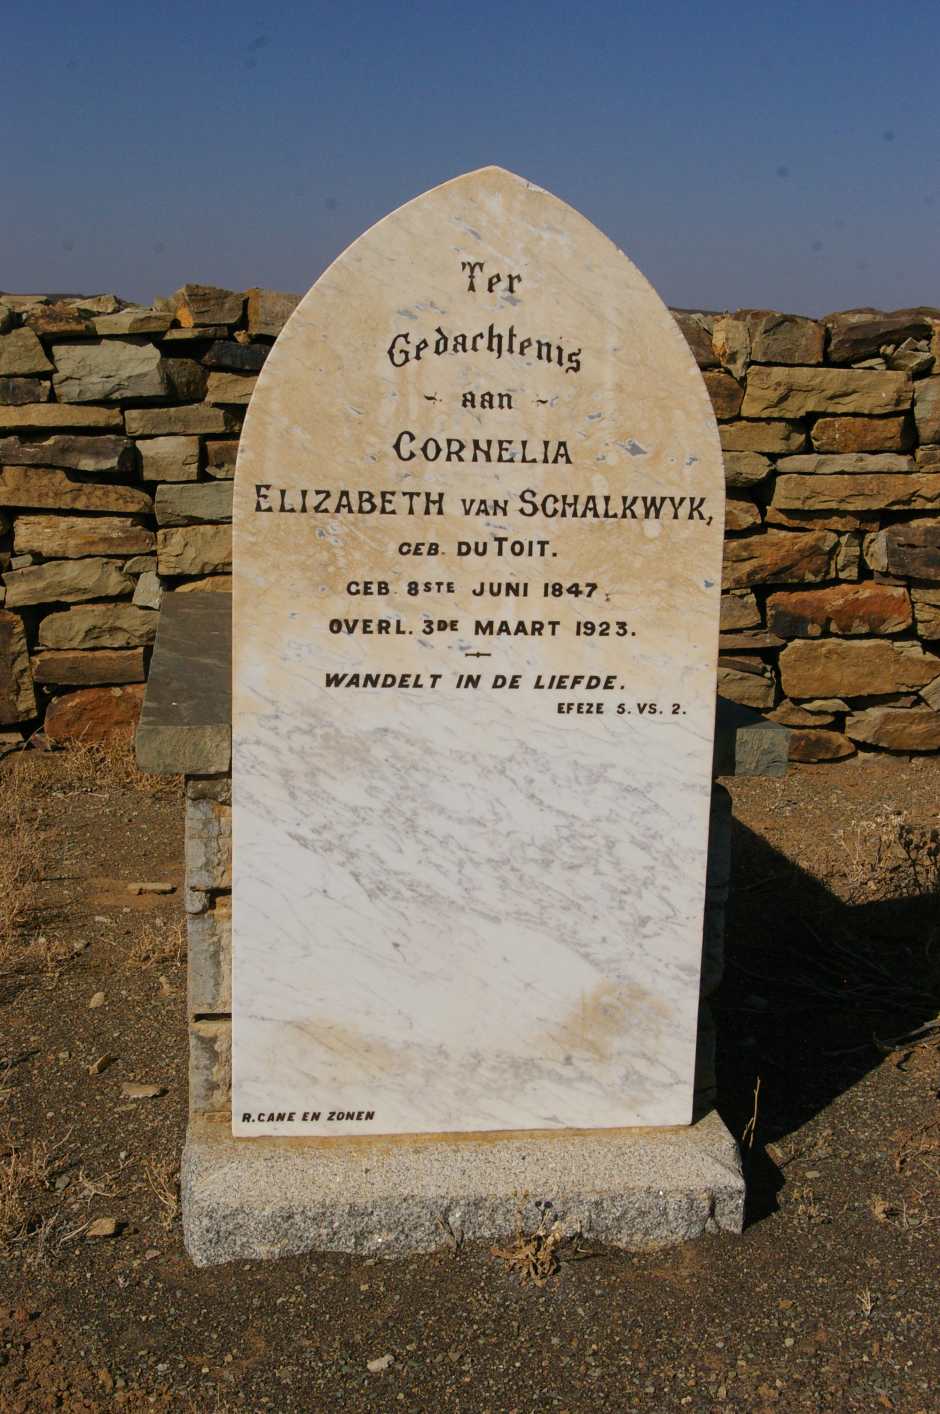 SCHALKWYK Cornelia Elizabeth, van nee DU TOIT 1847-1923